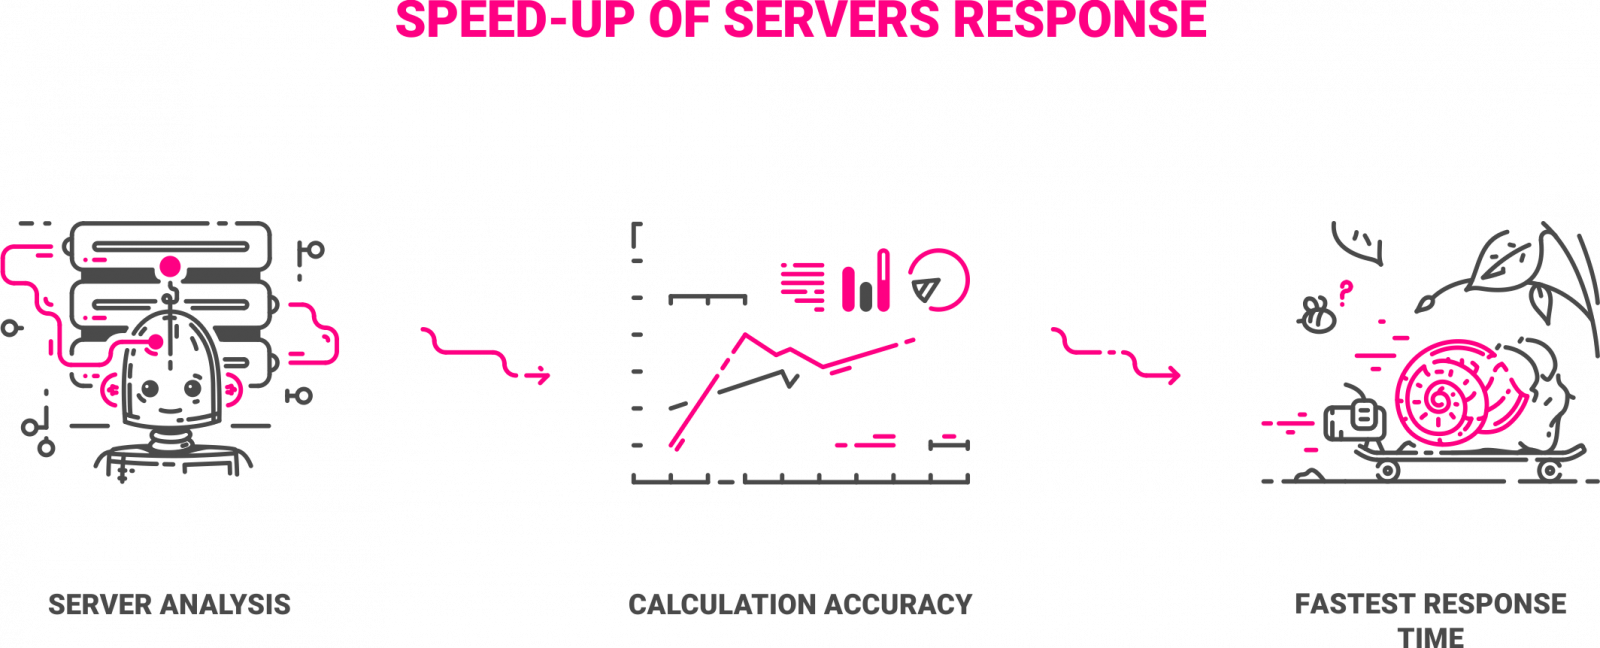 Speed-up of servers response l ASD Blog